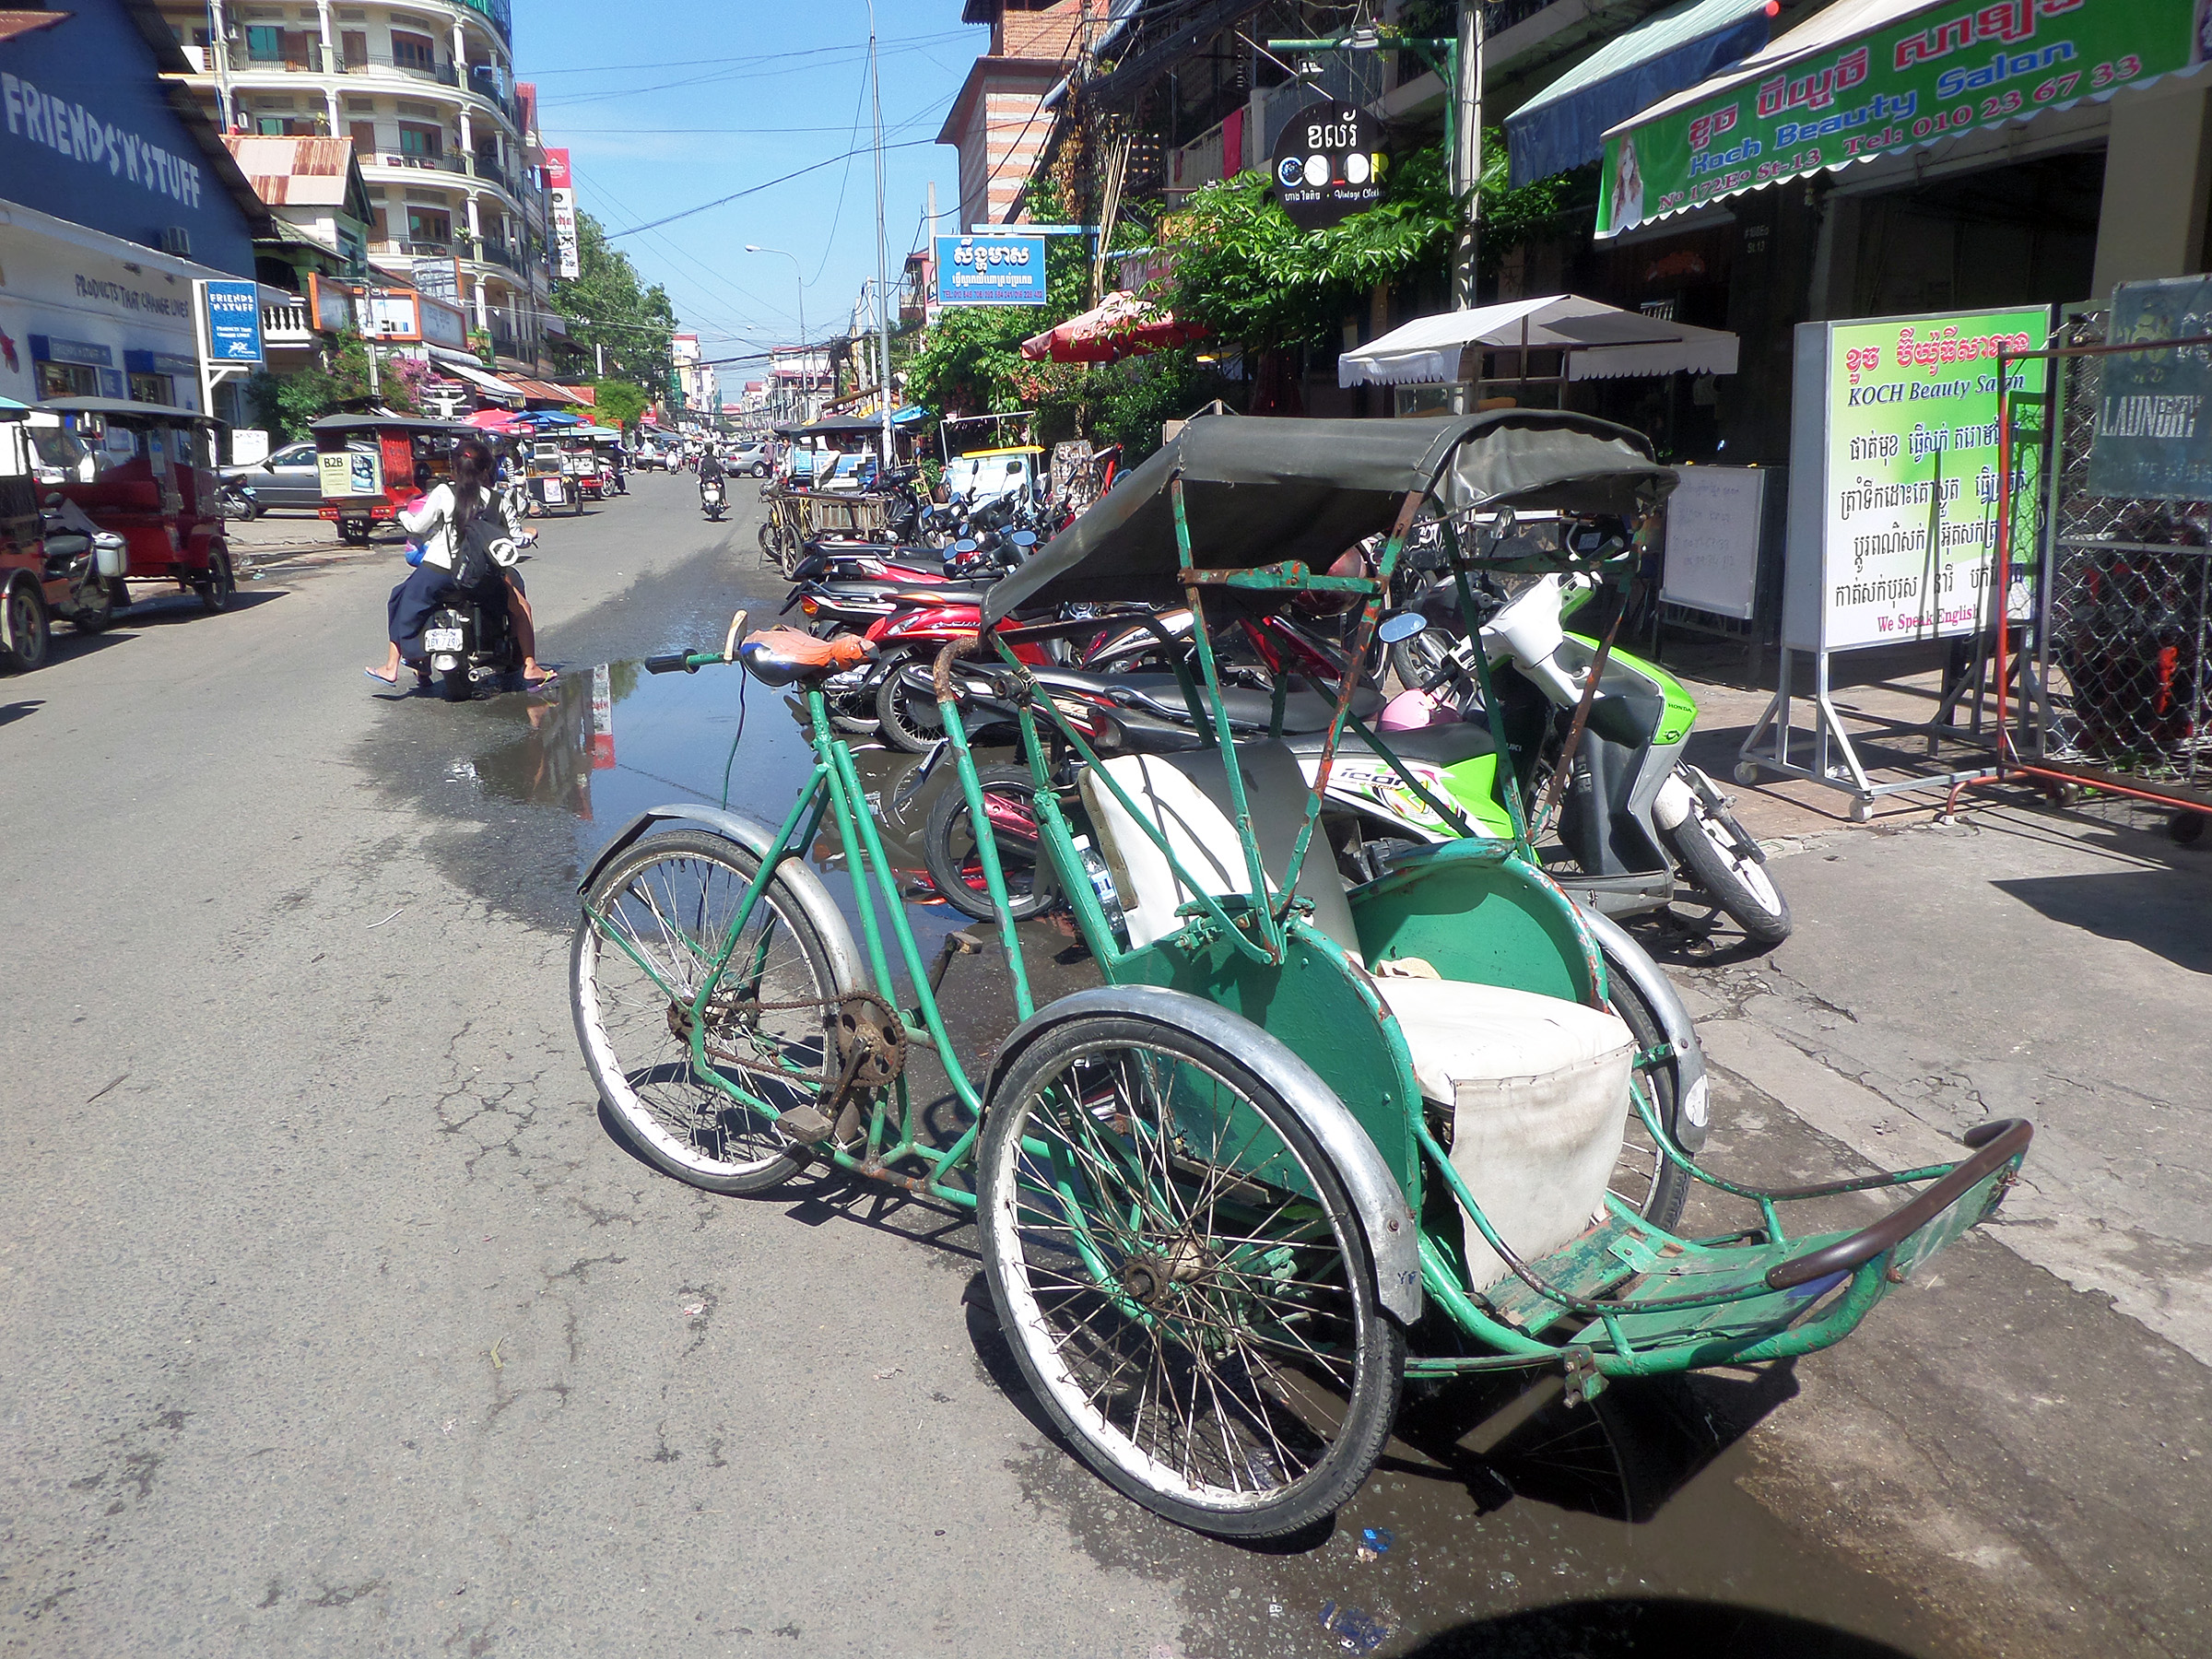 Parked Cambodian cyclos